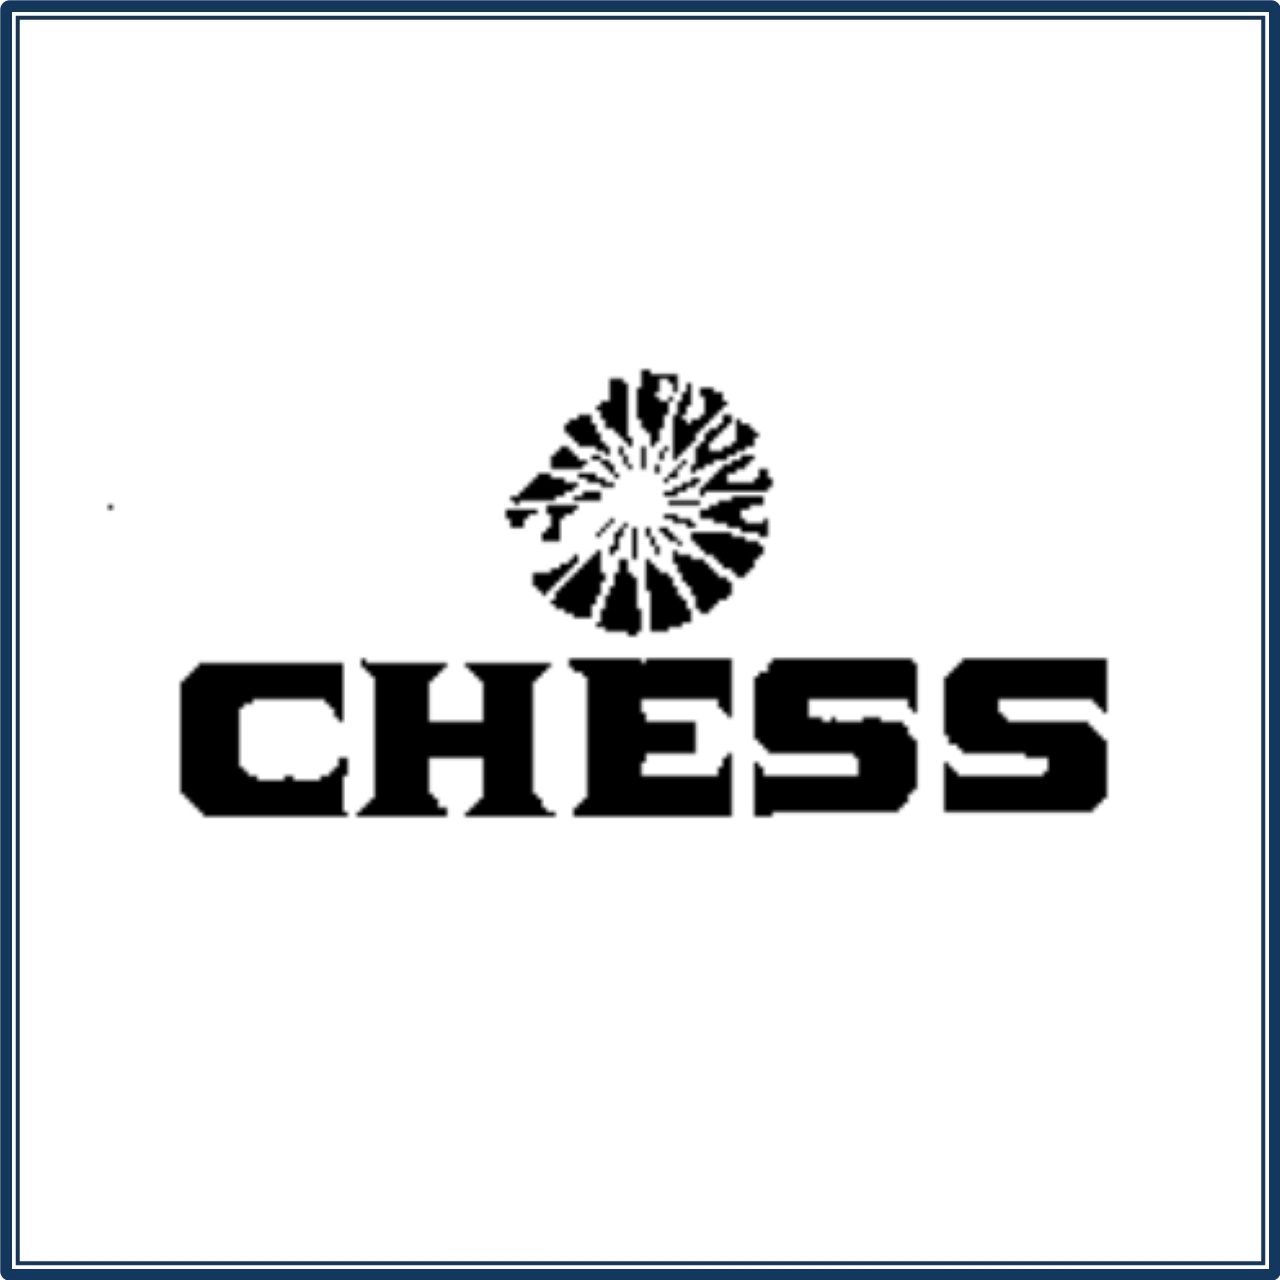 Chess Records Logo